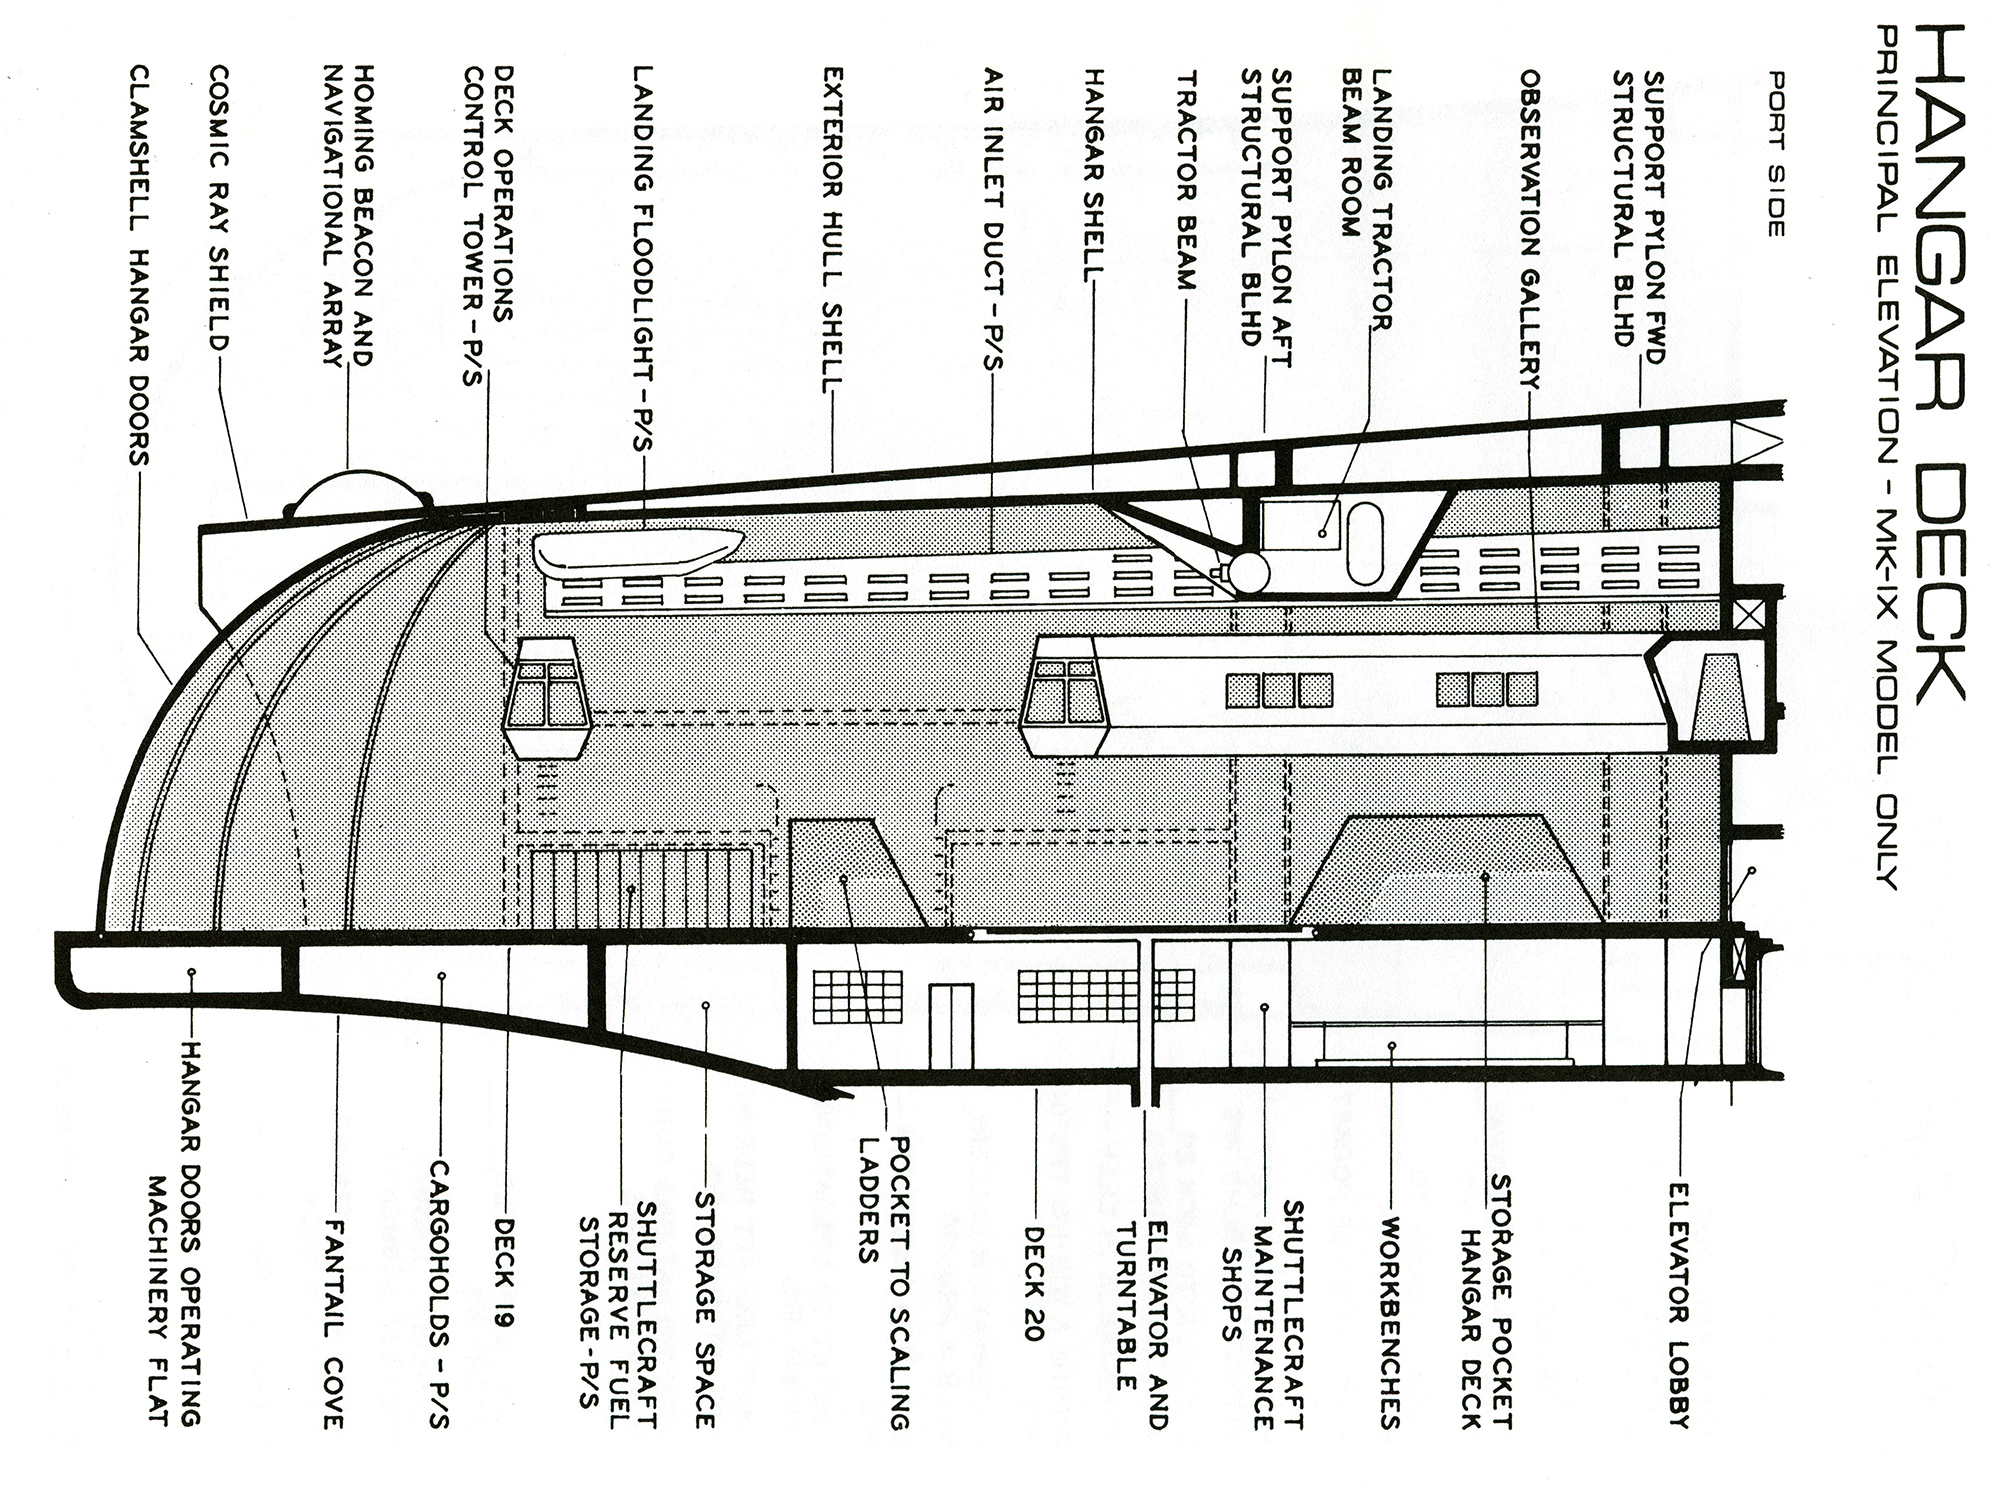 Enterprise hangar deck cutaway